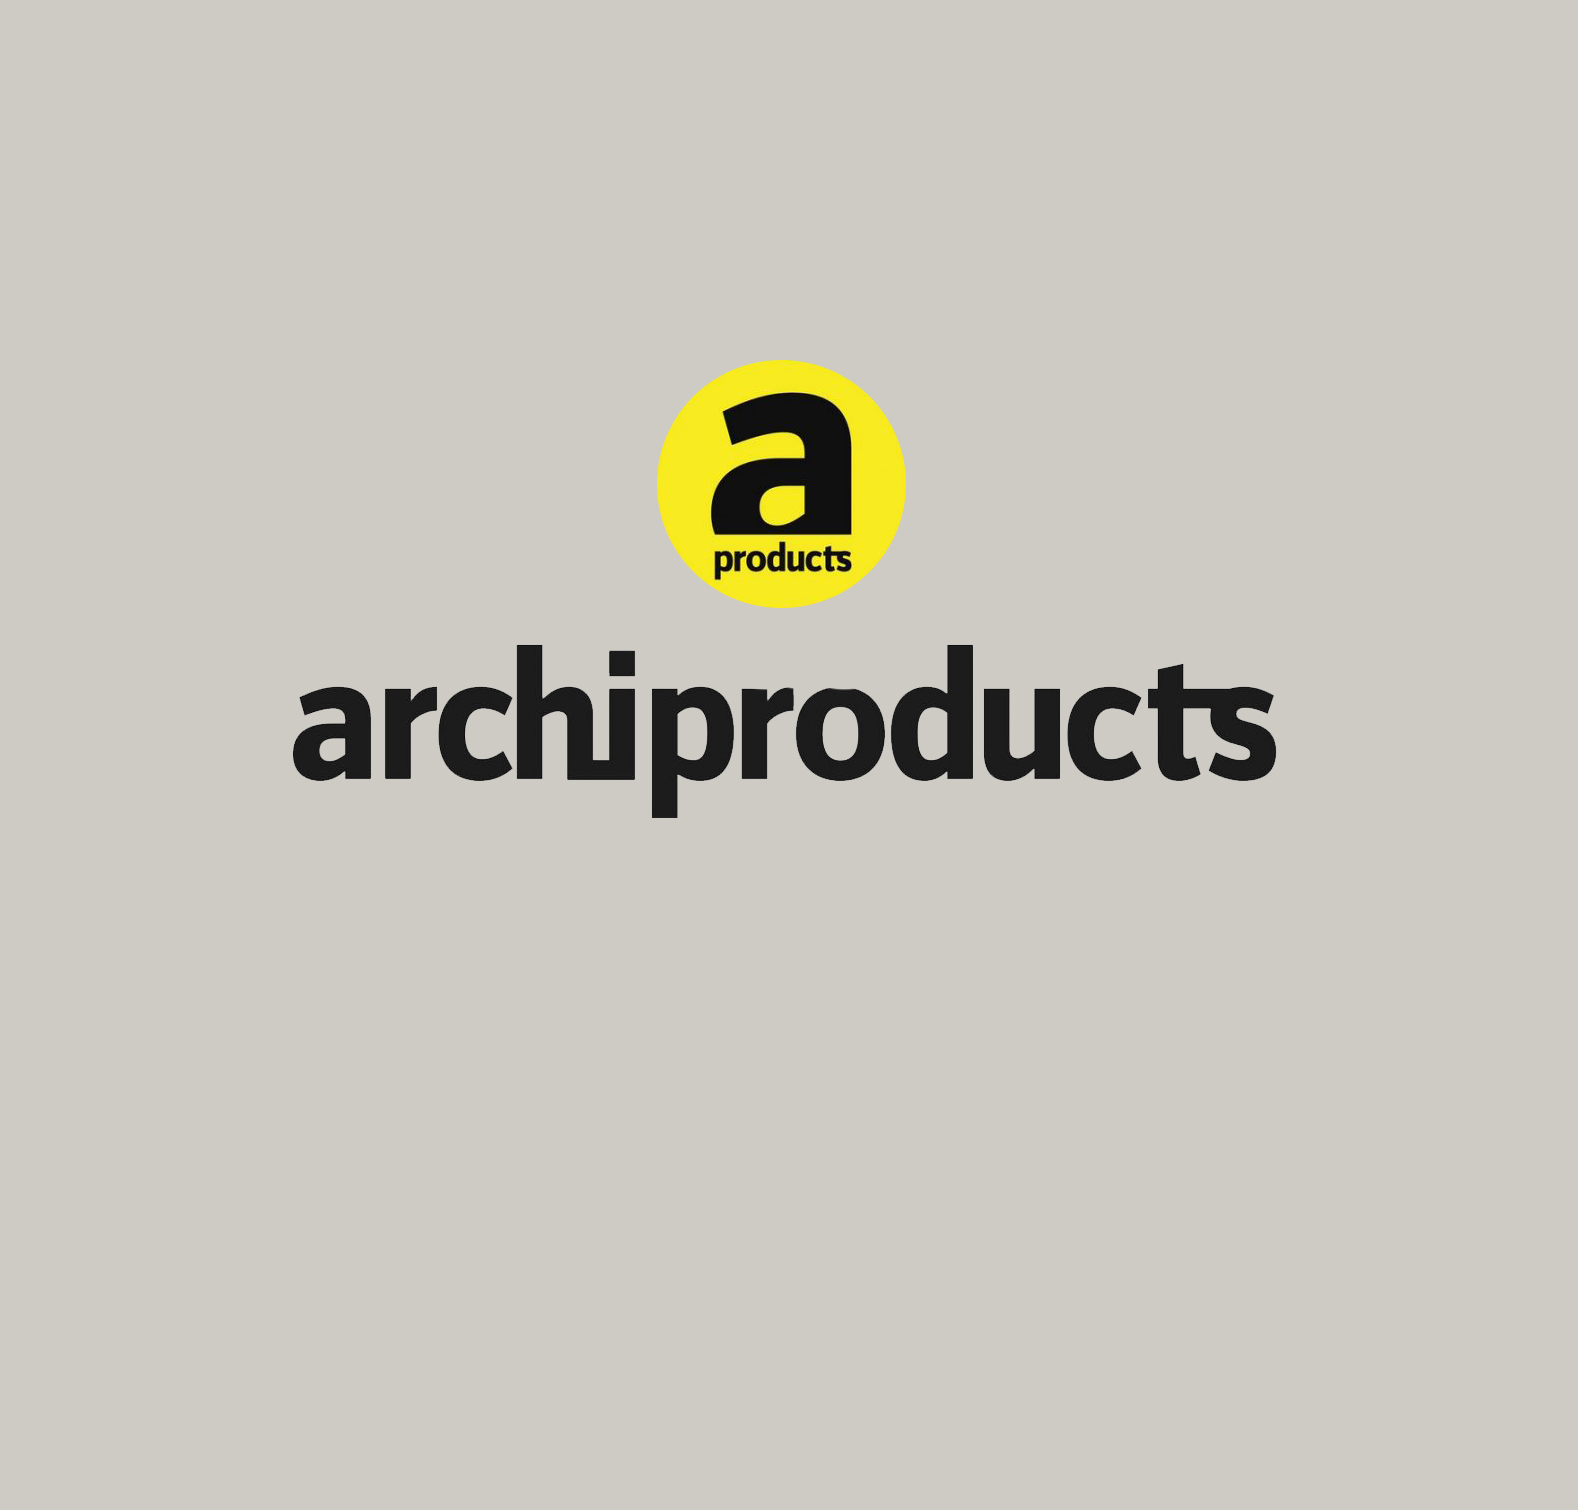 maniglie di design news archiproducts niva design